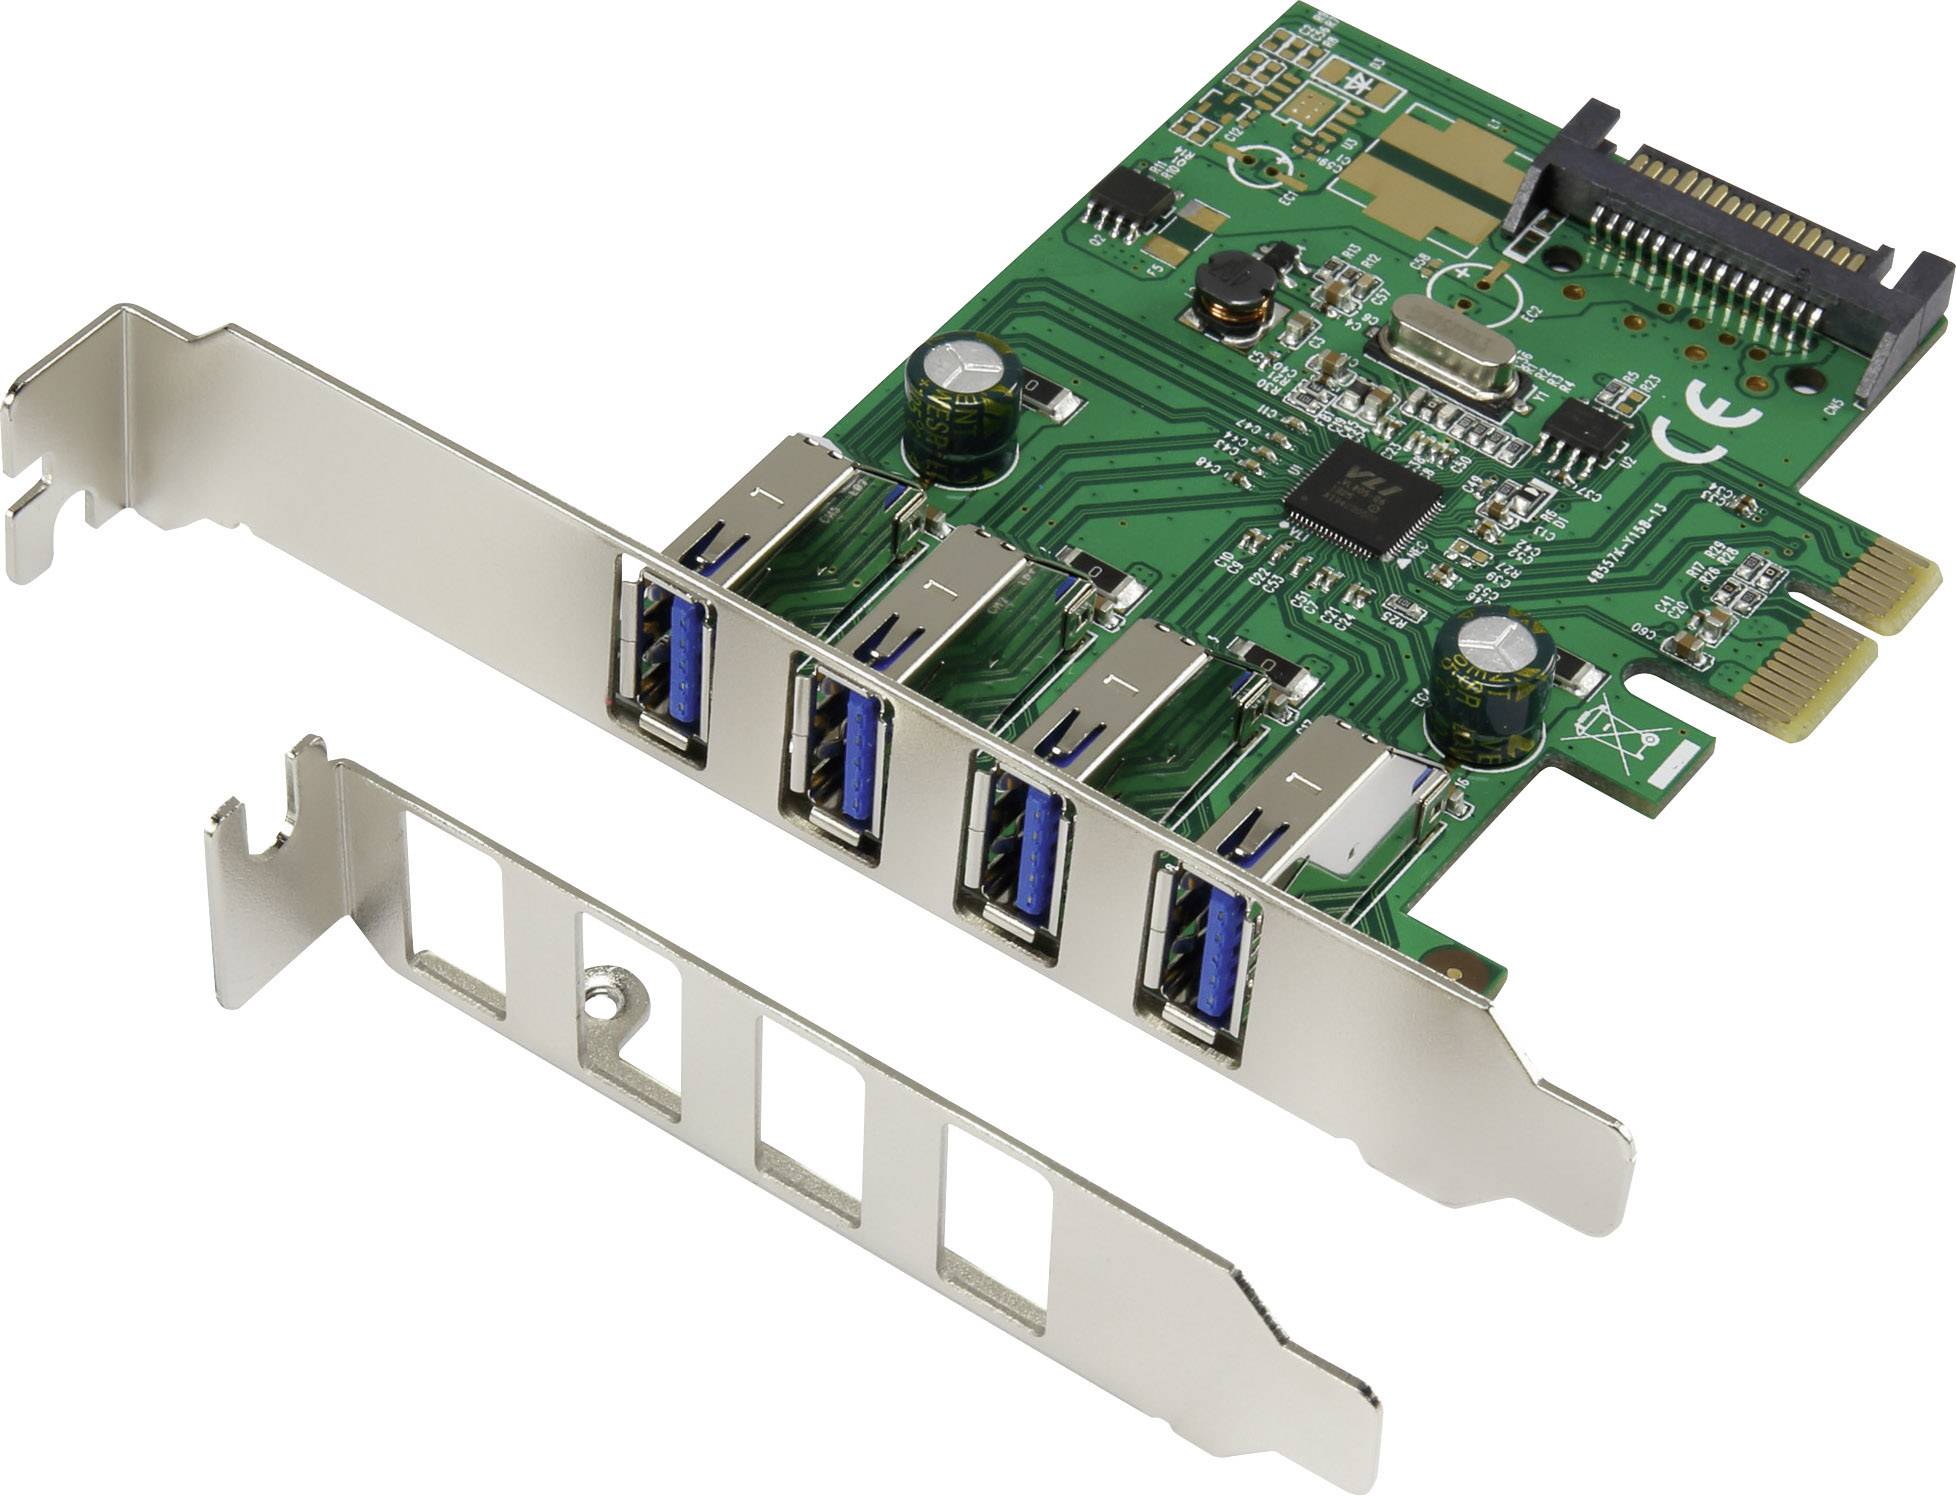 Afvise Tog ortodoks Renkforce 4 ports USB 3.2 1st Gen controller card USB type A PCIe |  Conrad.com